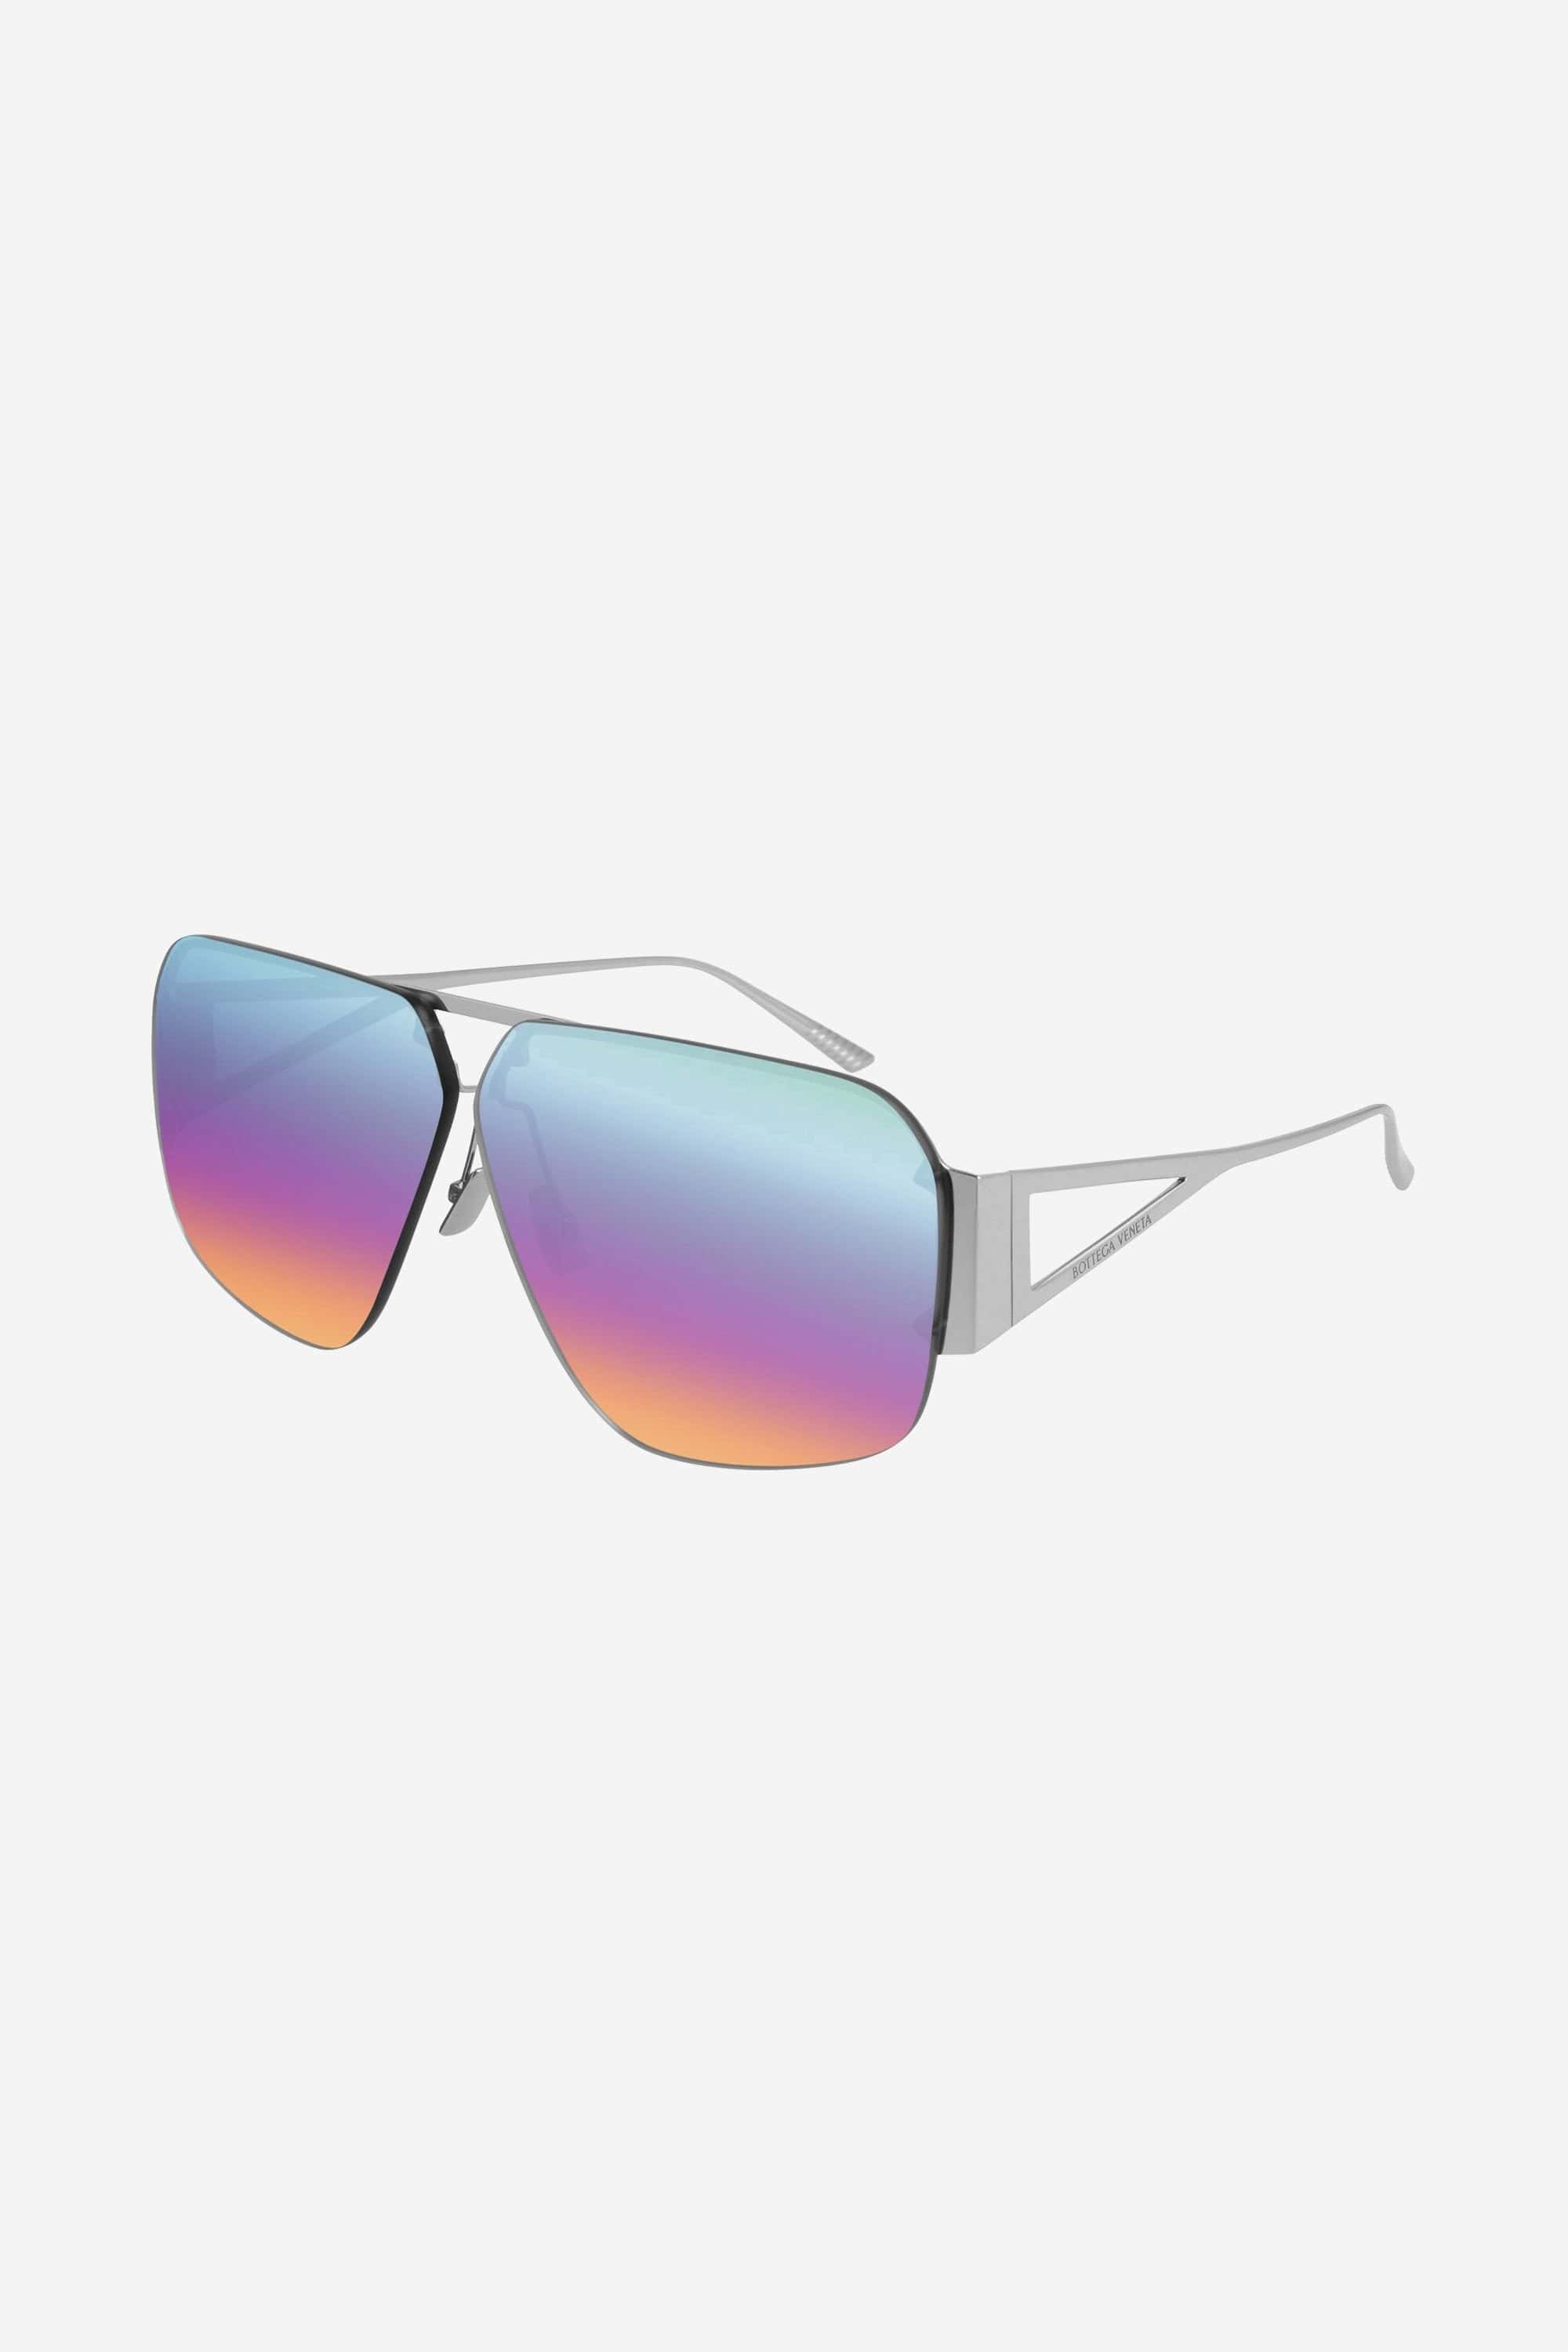 Bottega Veneta geometric caravan silver multicolor sunglasses - Eyewear Club